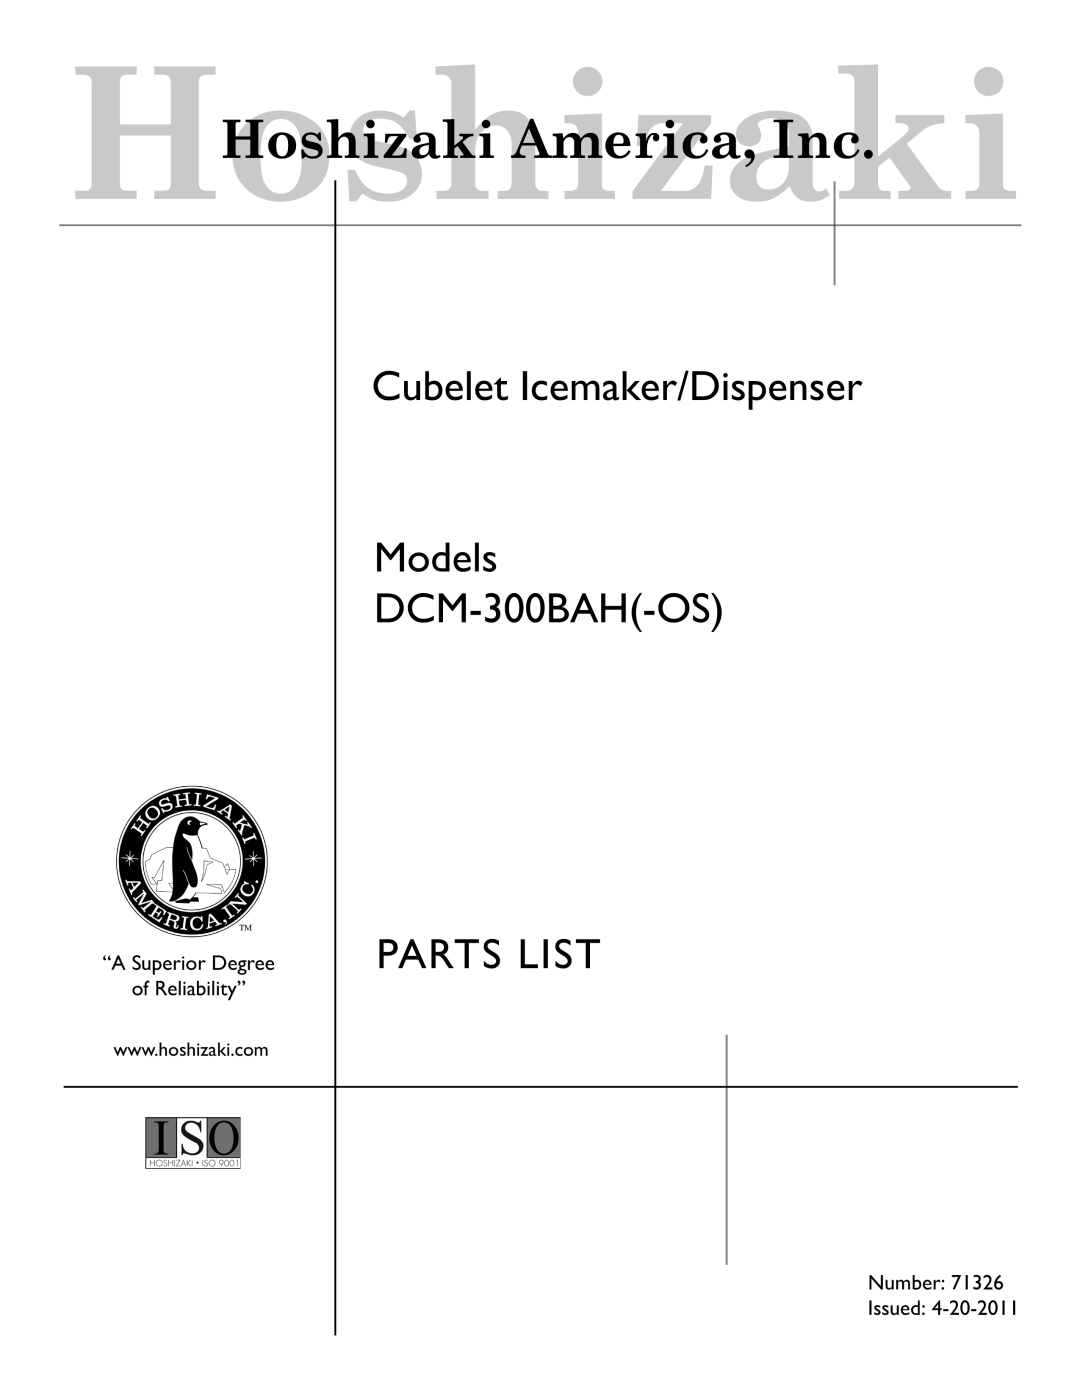 Hoshizaki manual Cubelet Icemaker/Dispenser Models DCM-300BAH-OS, Parts List, “A Superior Degree of Reliability” 